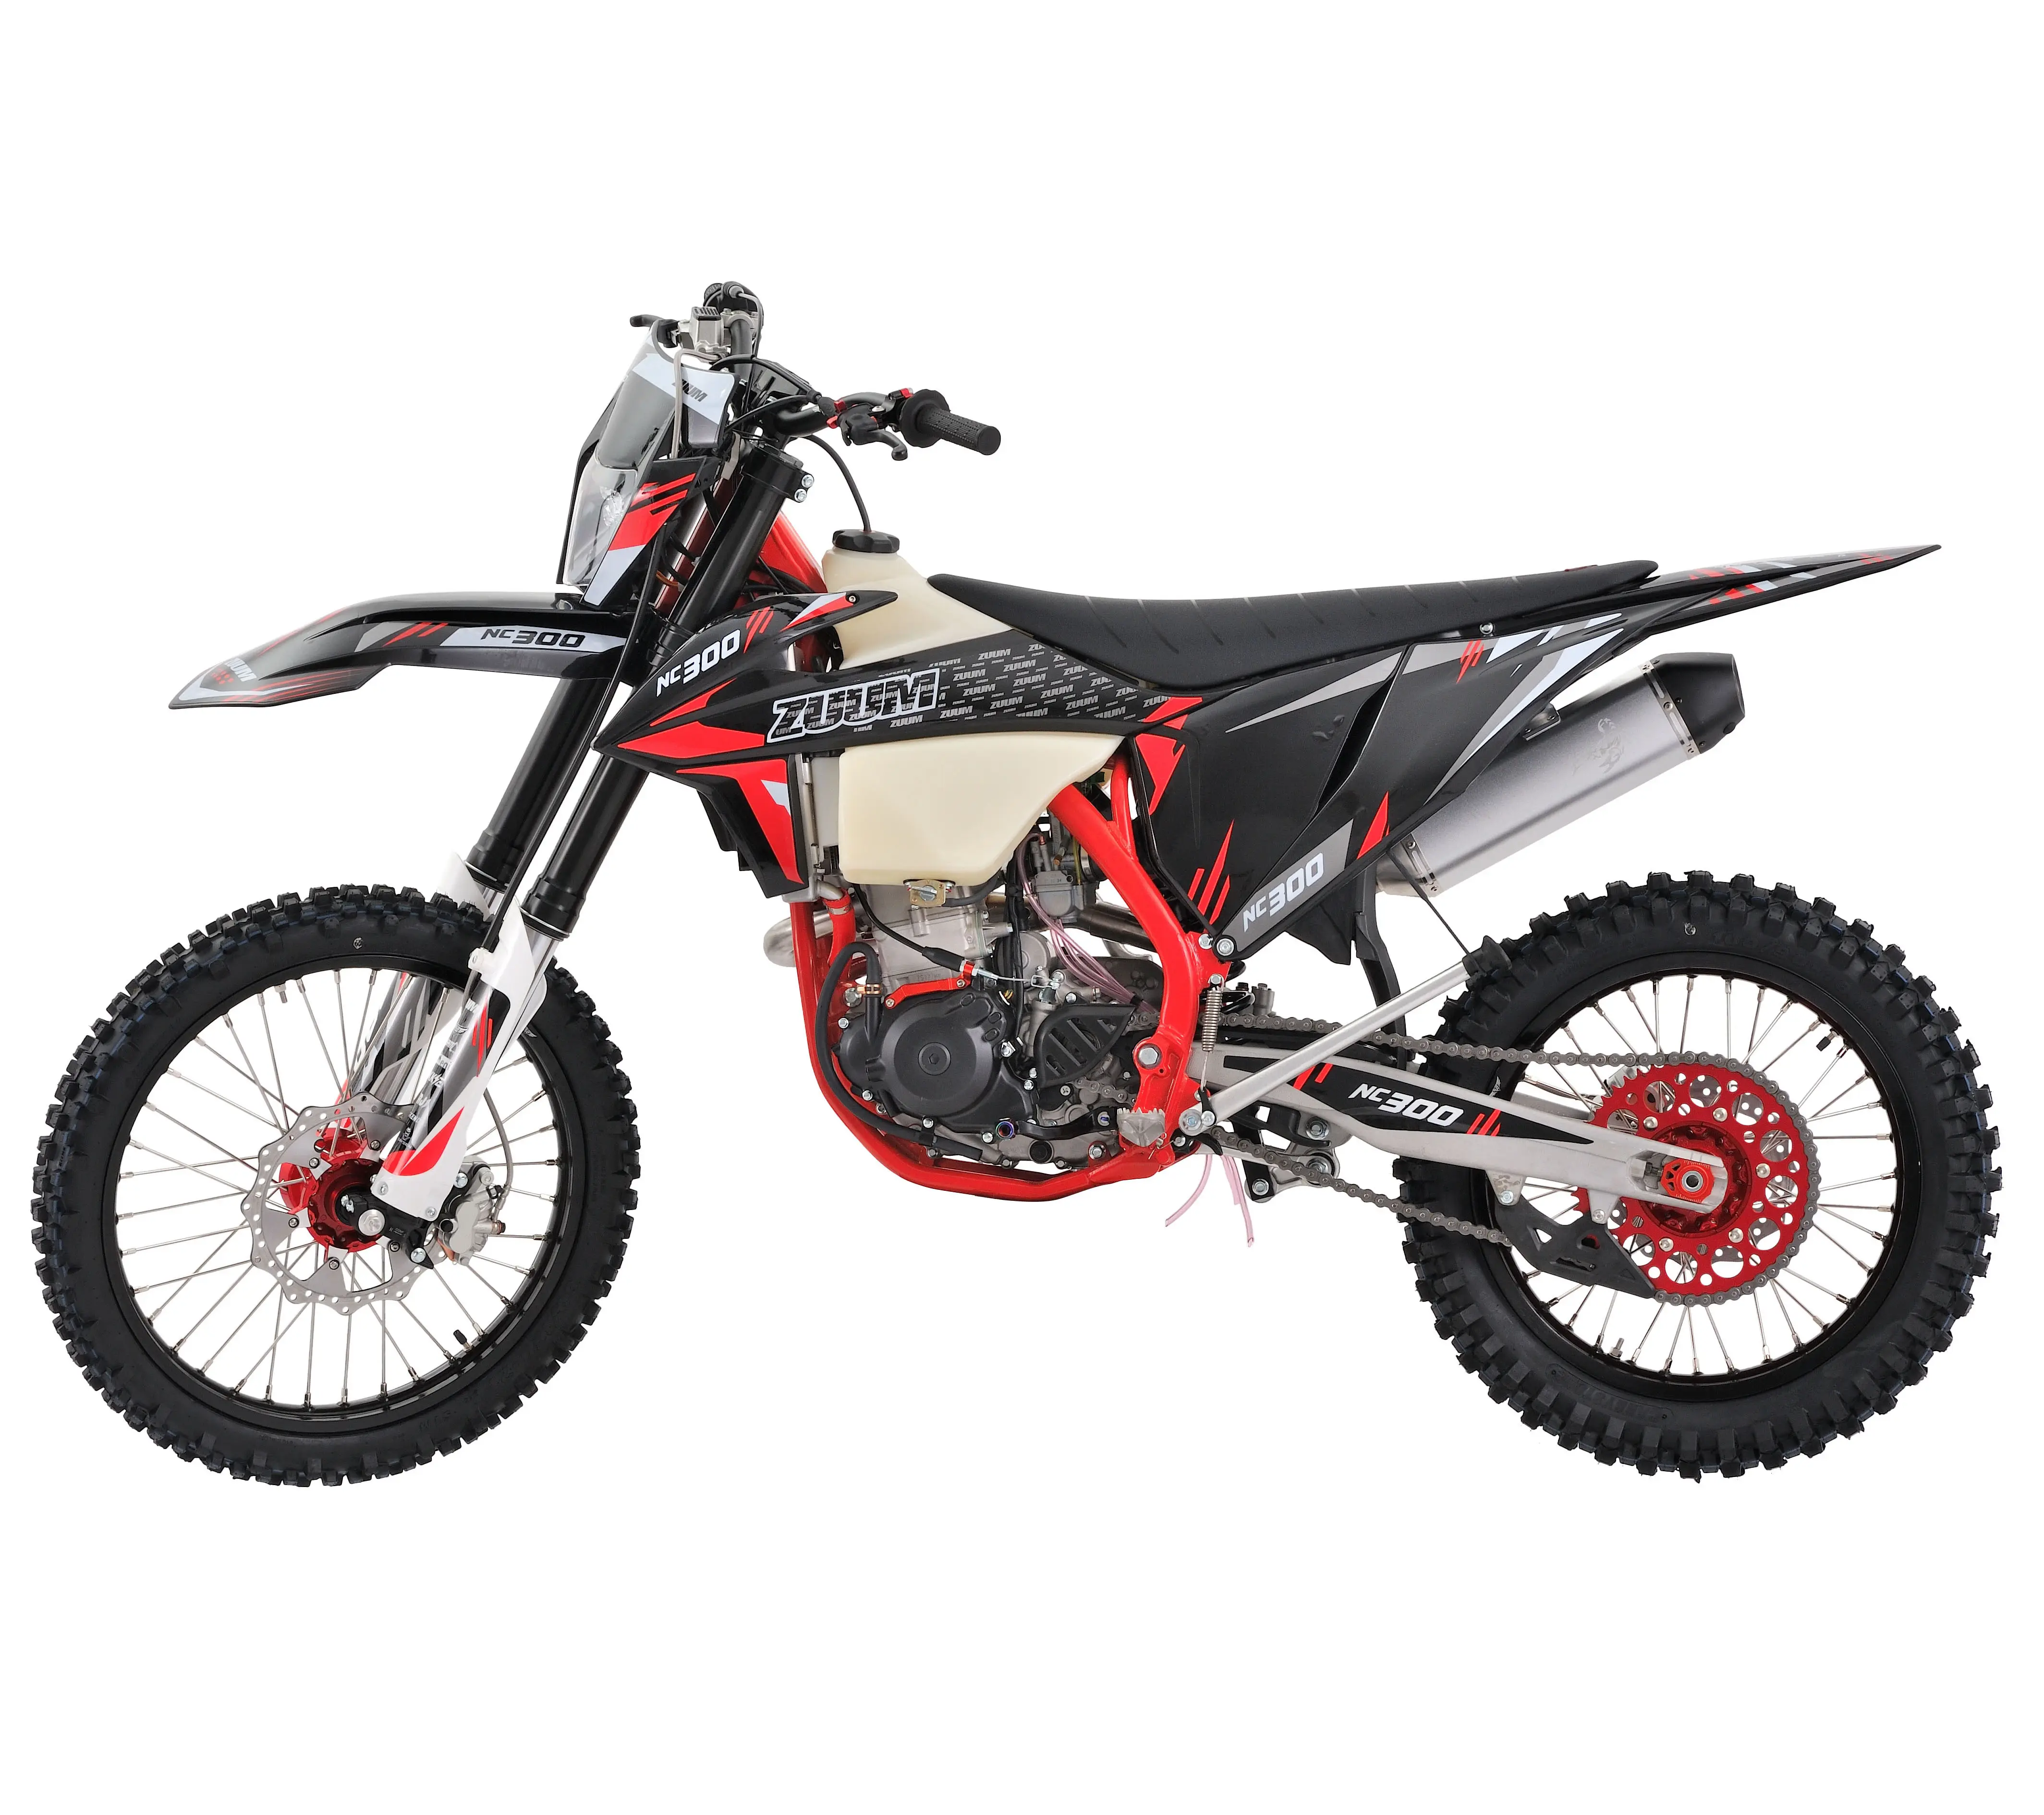 Factory Direct-sales ZUUMAV K8 NC300cc High Speed Adult Dirt Bike Off-road Motorbike with big fuel tank Enduro Motorcycles